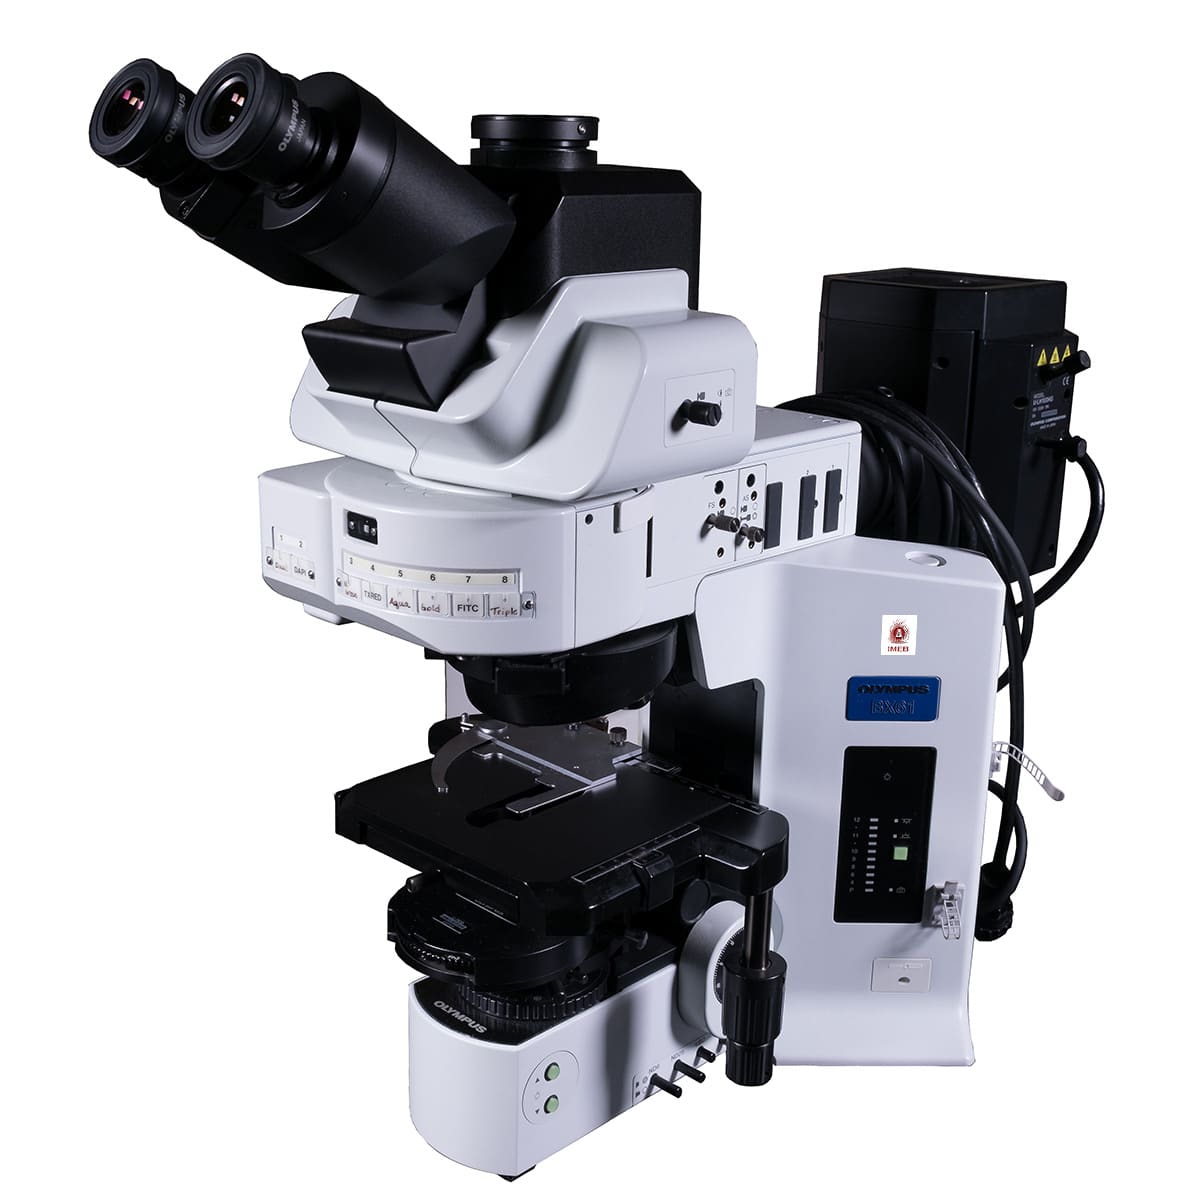 Olympus 1000 demo. Olympus BX-61. Микроскоп Olympus bx63. Металлографический микроскоп Olympus bx53m. Полумоторизованный микроскоп Olympus bx53 Motorised.